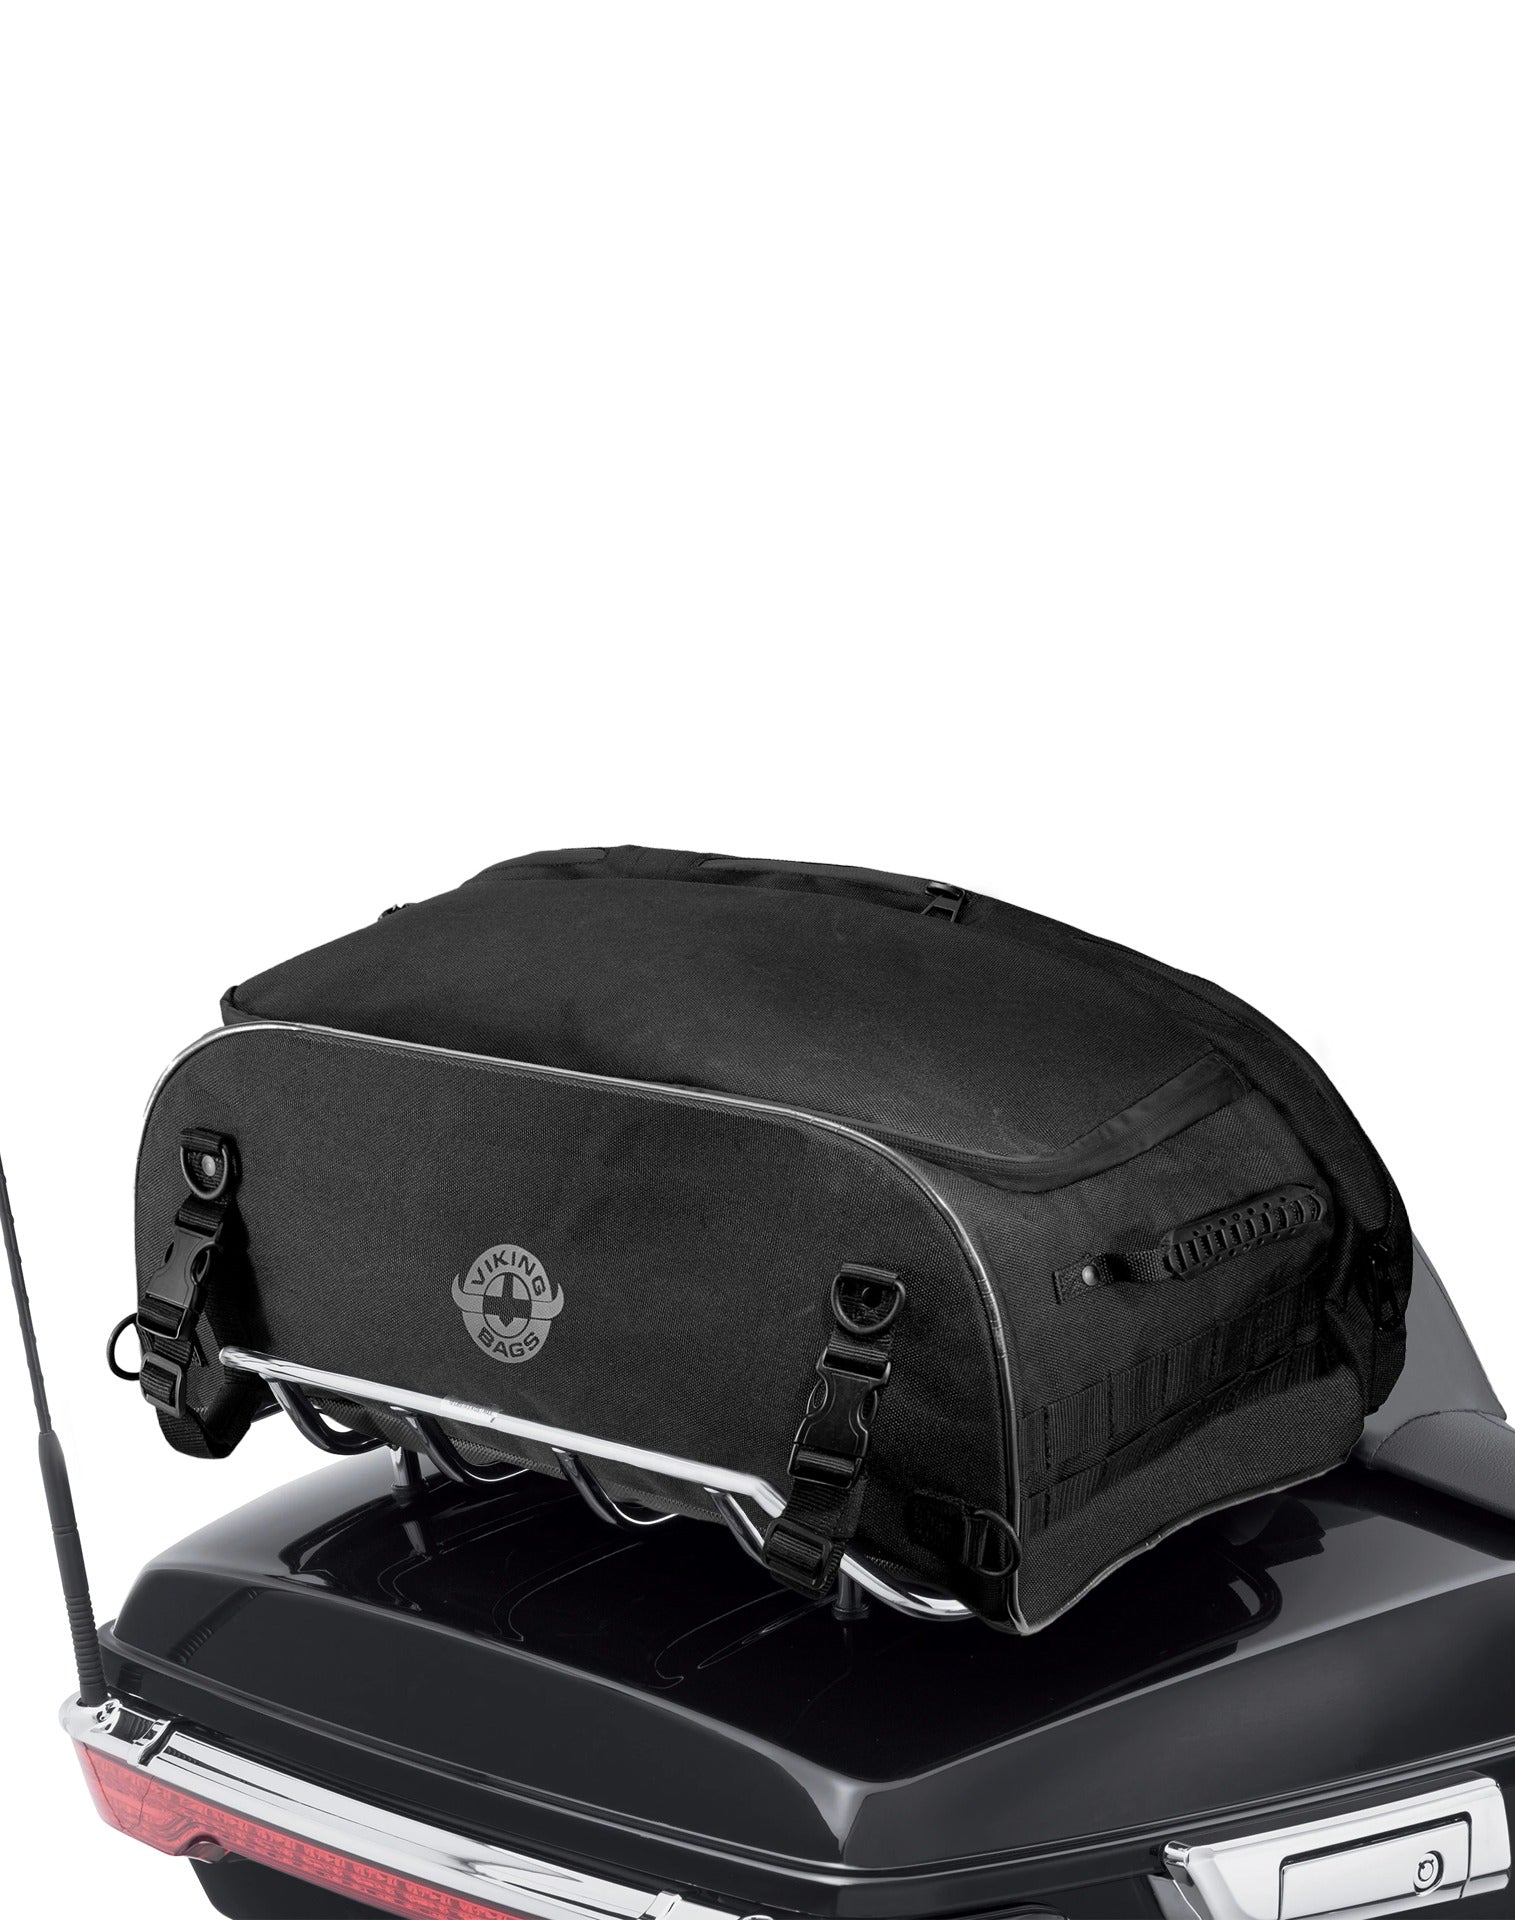 42L - Voyage Collapsible XL Yamaha Motorcycle Luggage Rack Bag